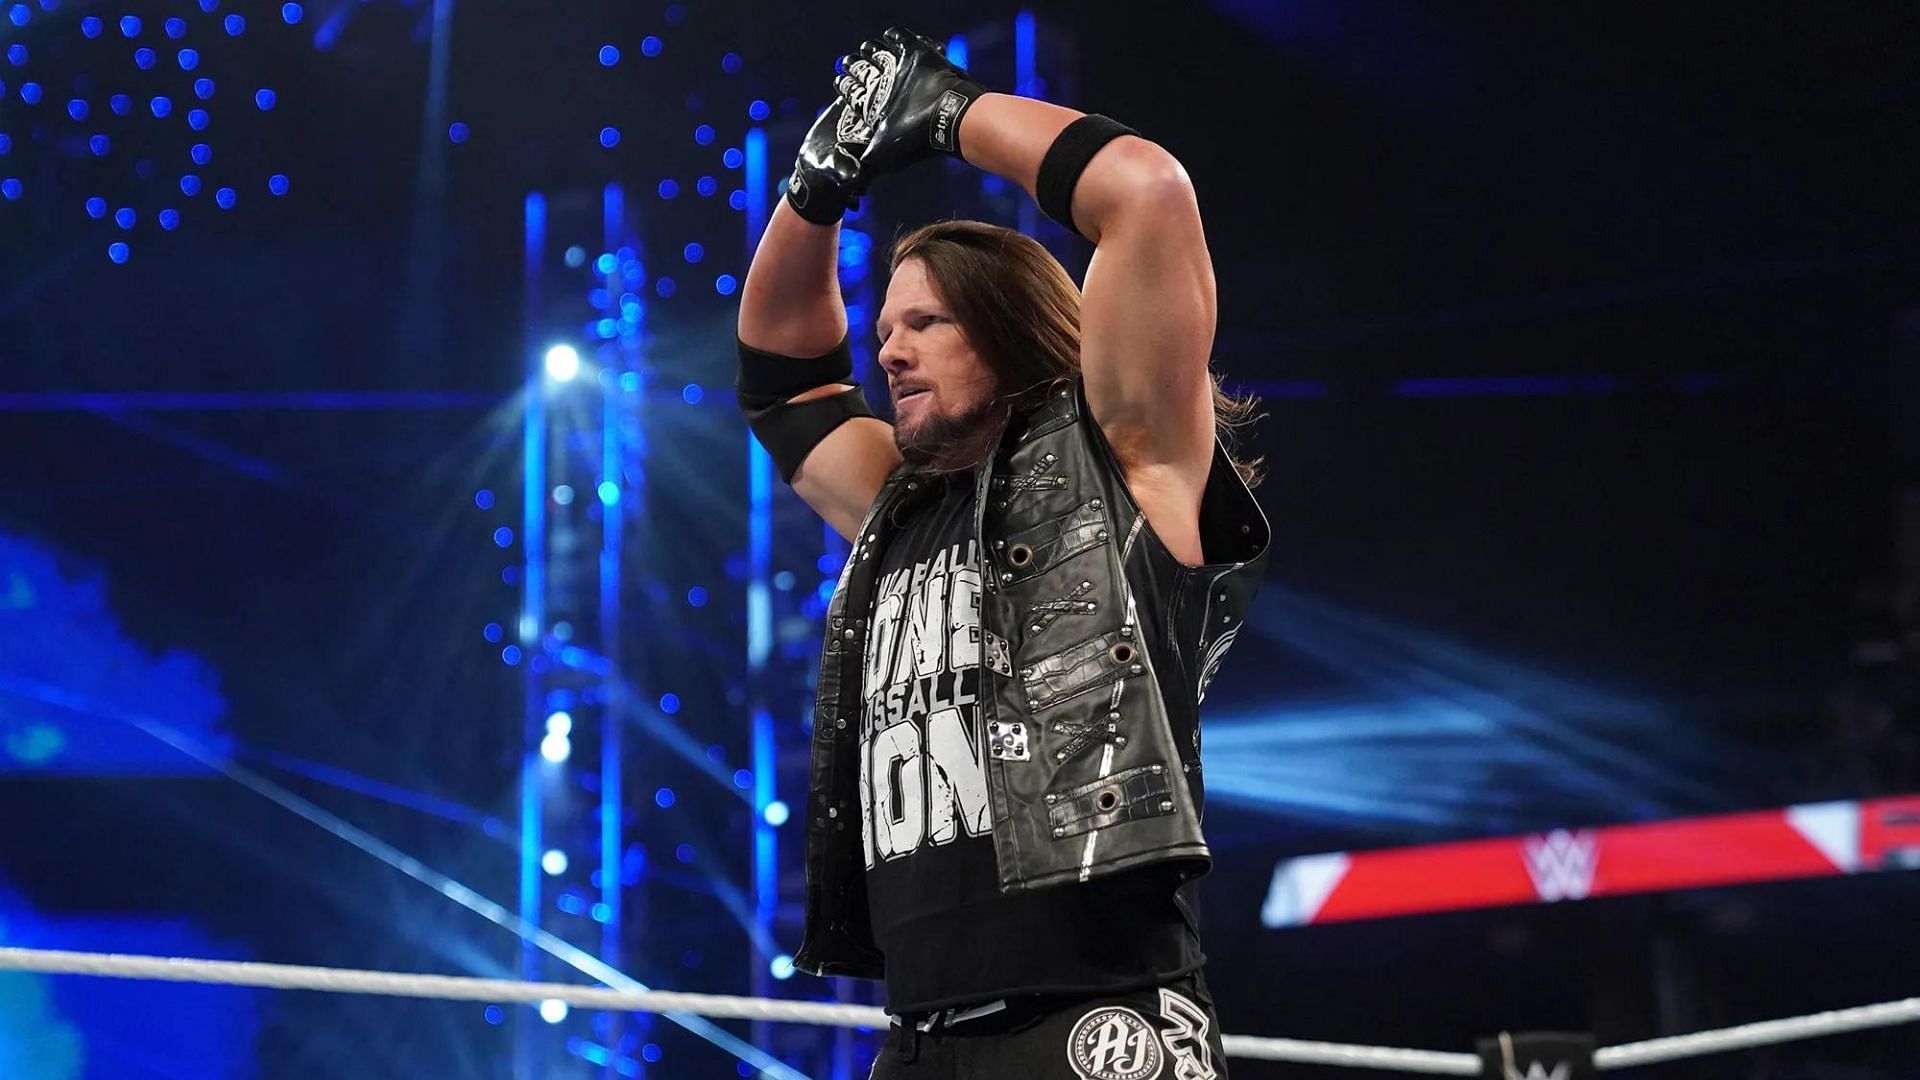 AJ Styles is a former WWE Champion